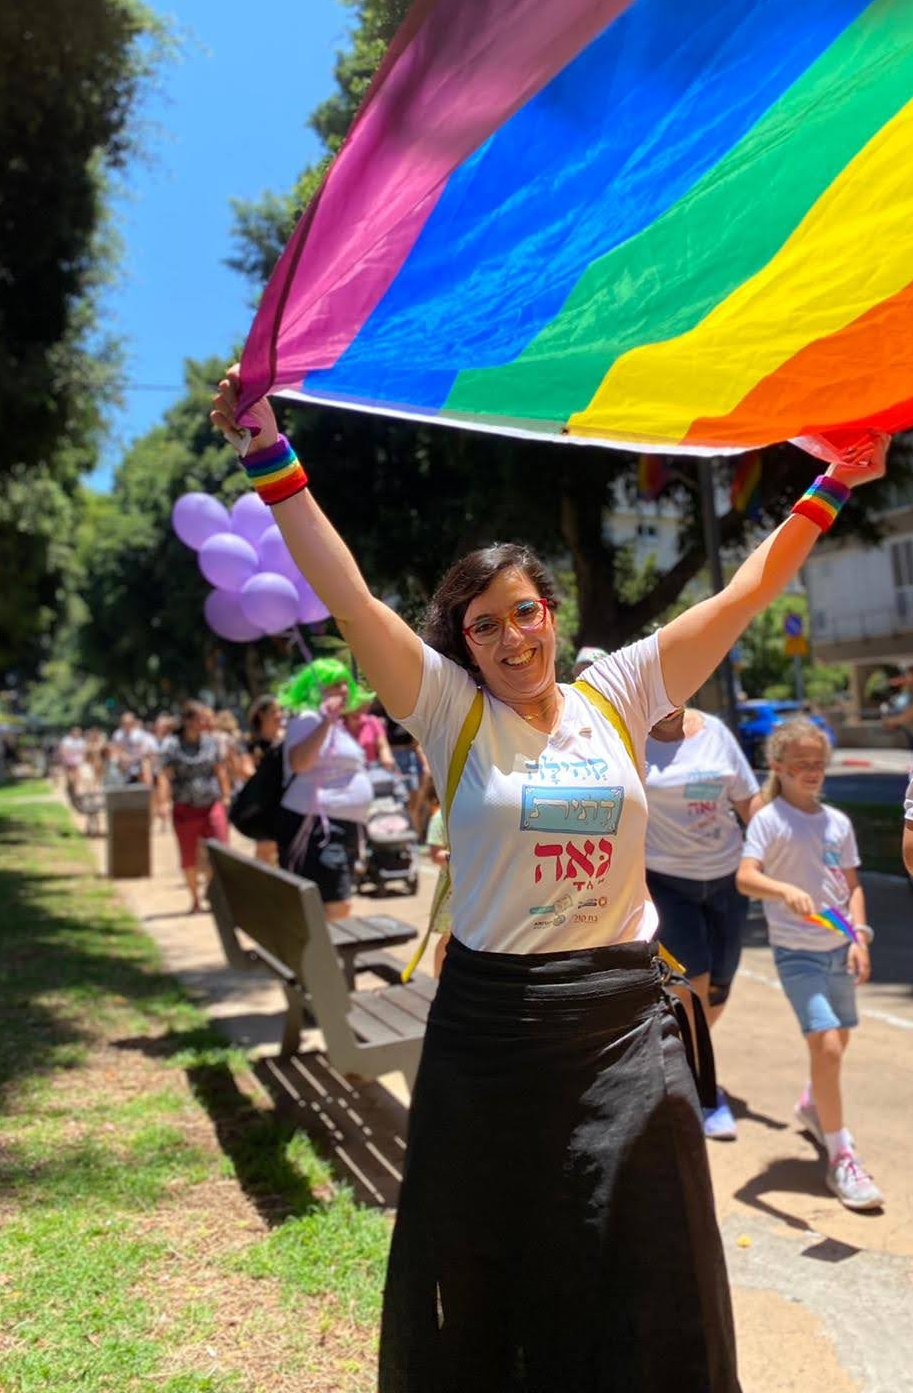 Israel's LGBTQ community celebrates equality in surrogacy zehorit